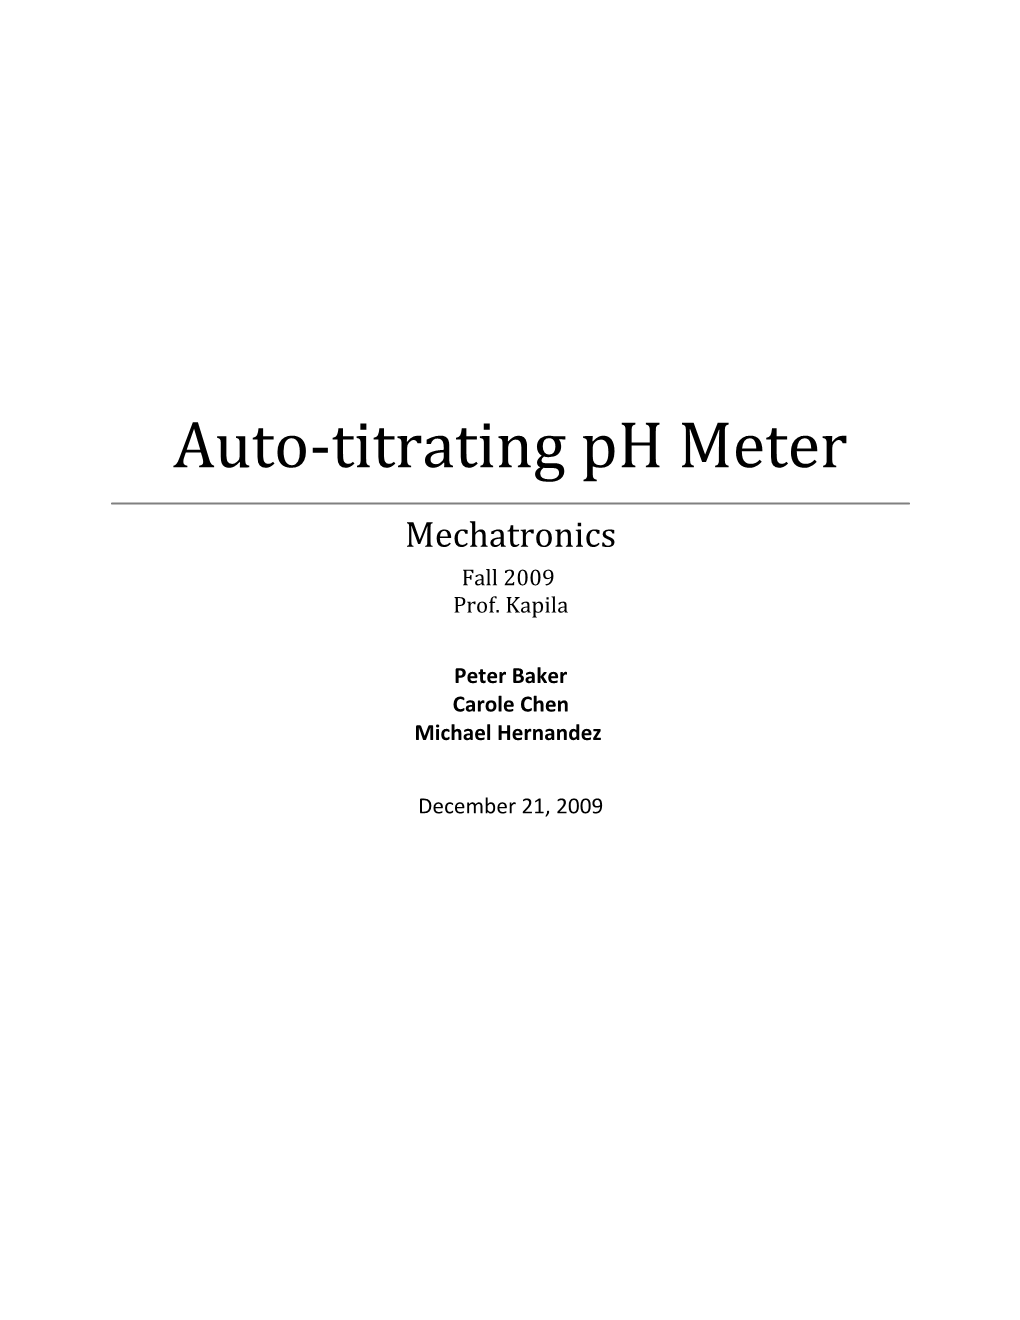 Auto-Titrating Ph Meter